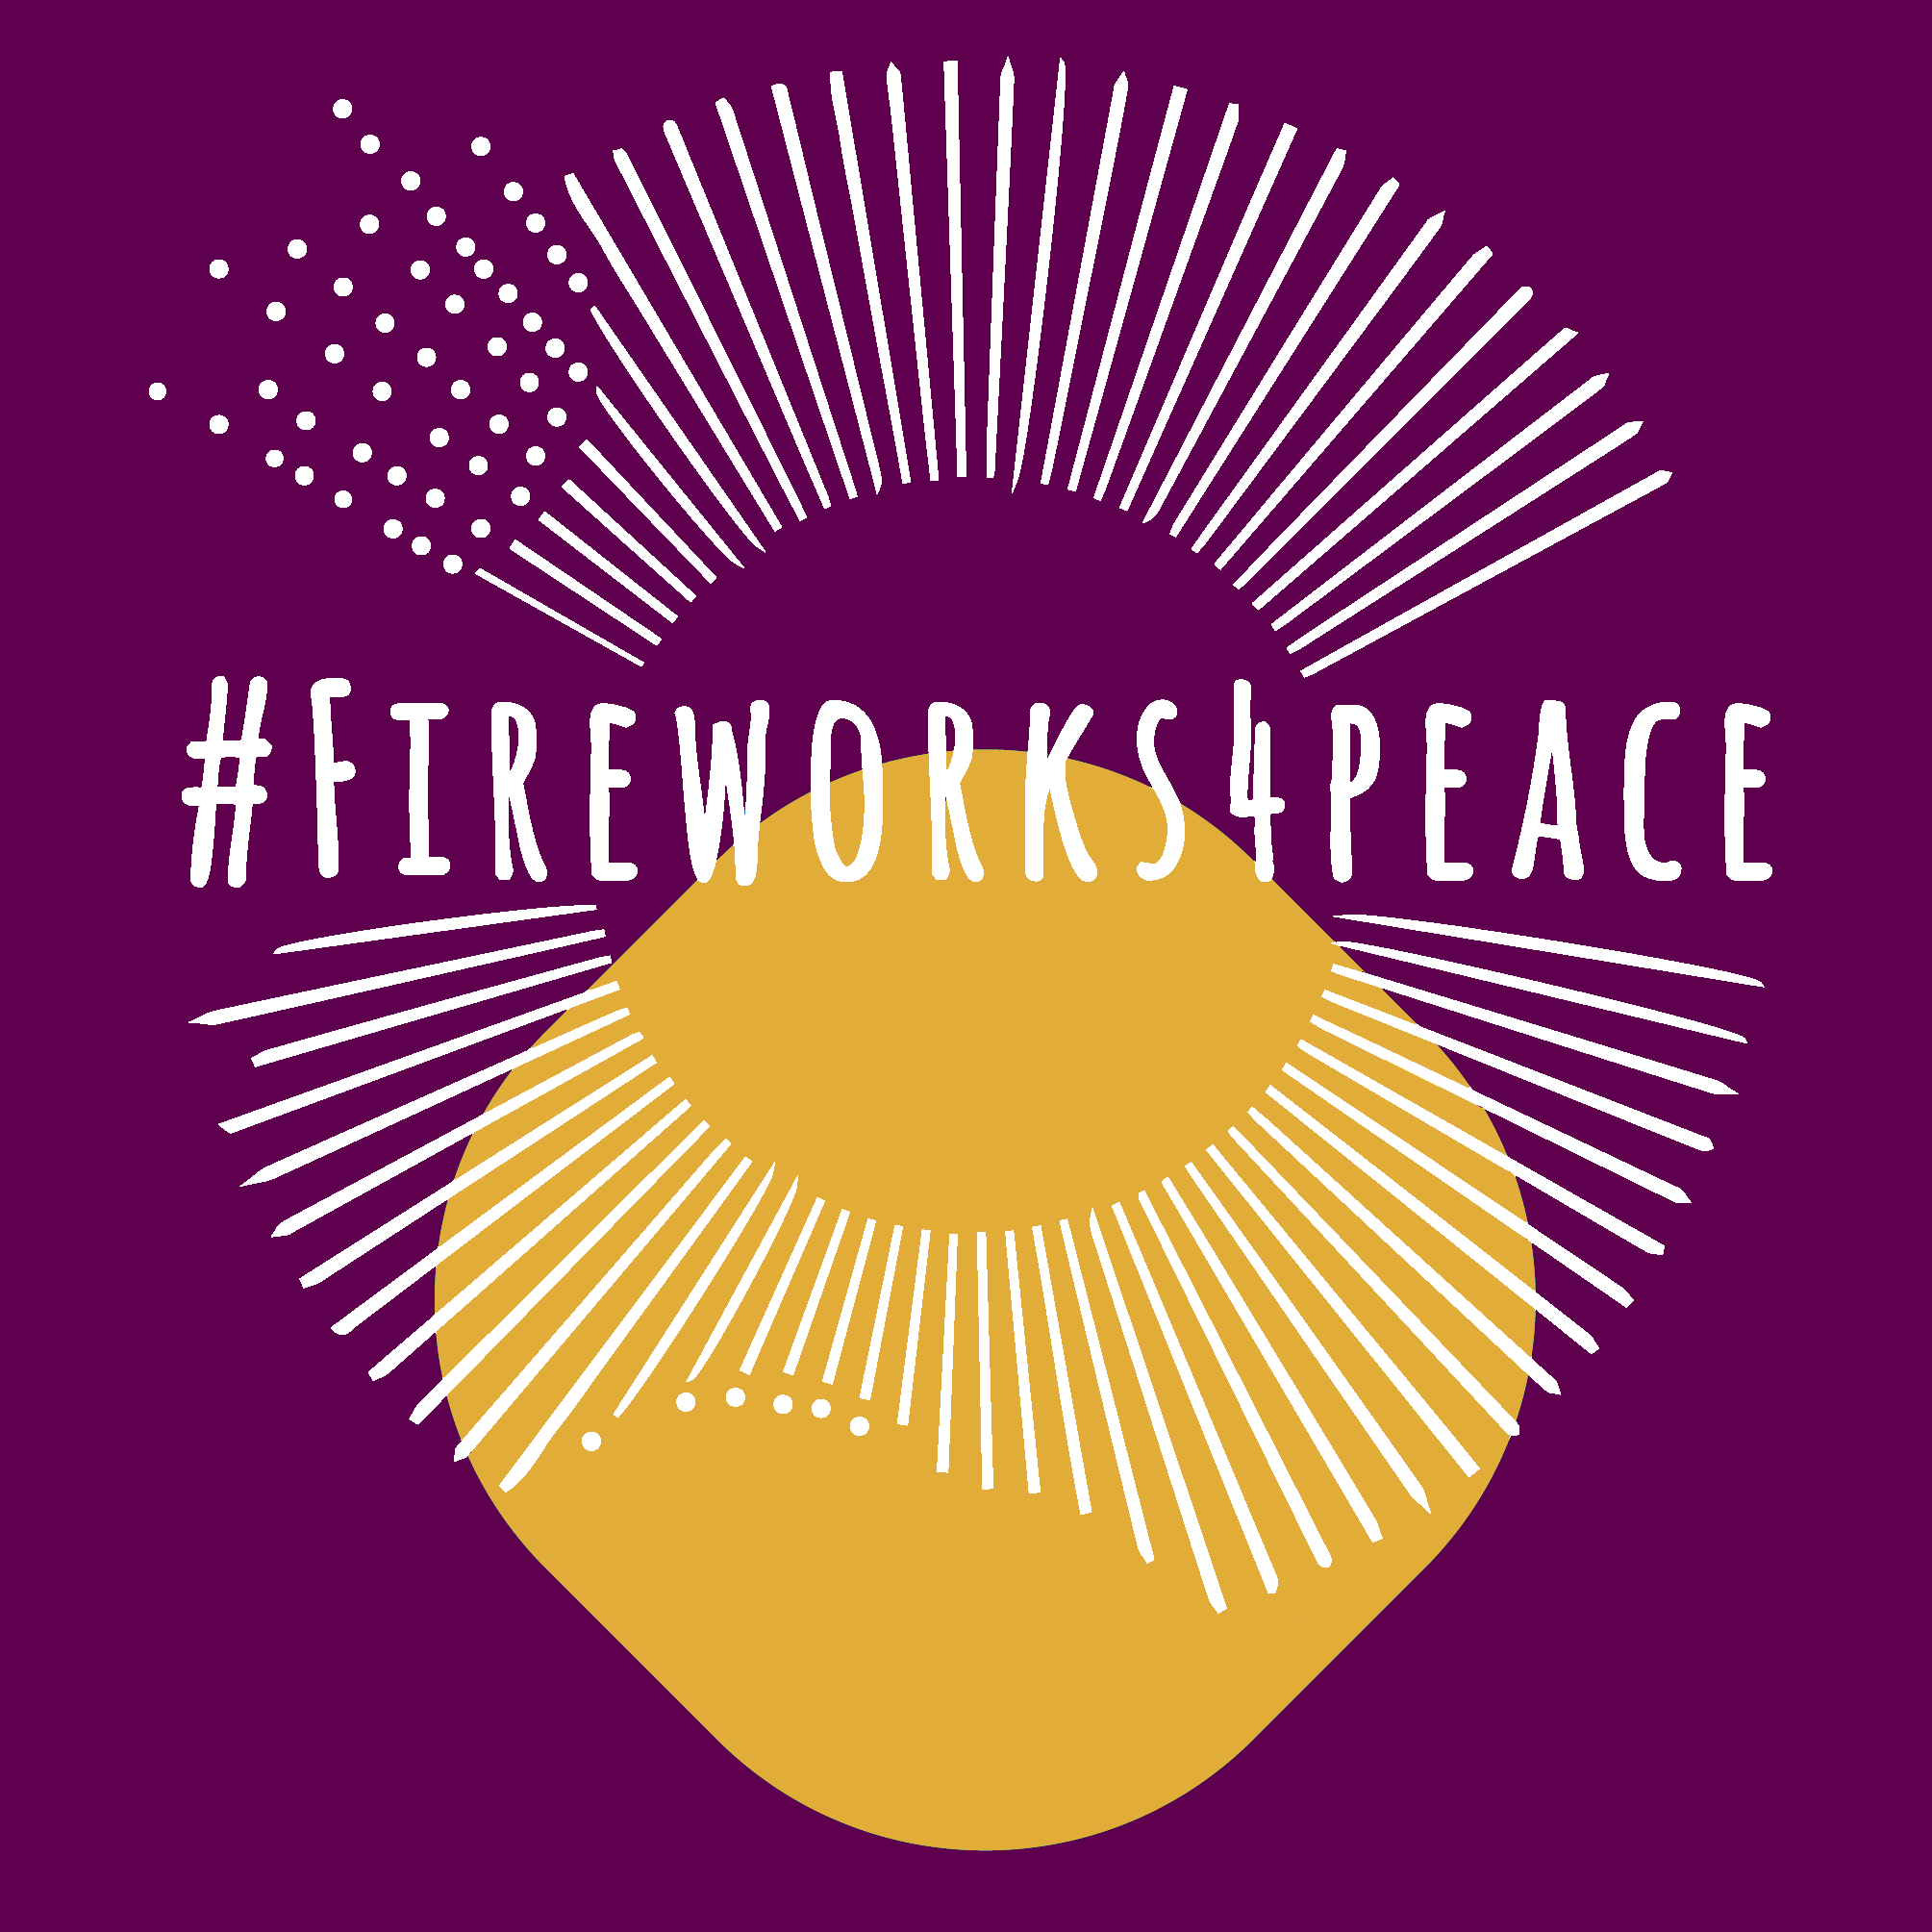 #Fireworks4Peace: weltweite Aktion